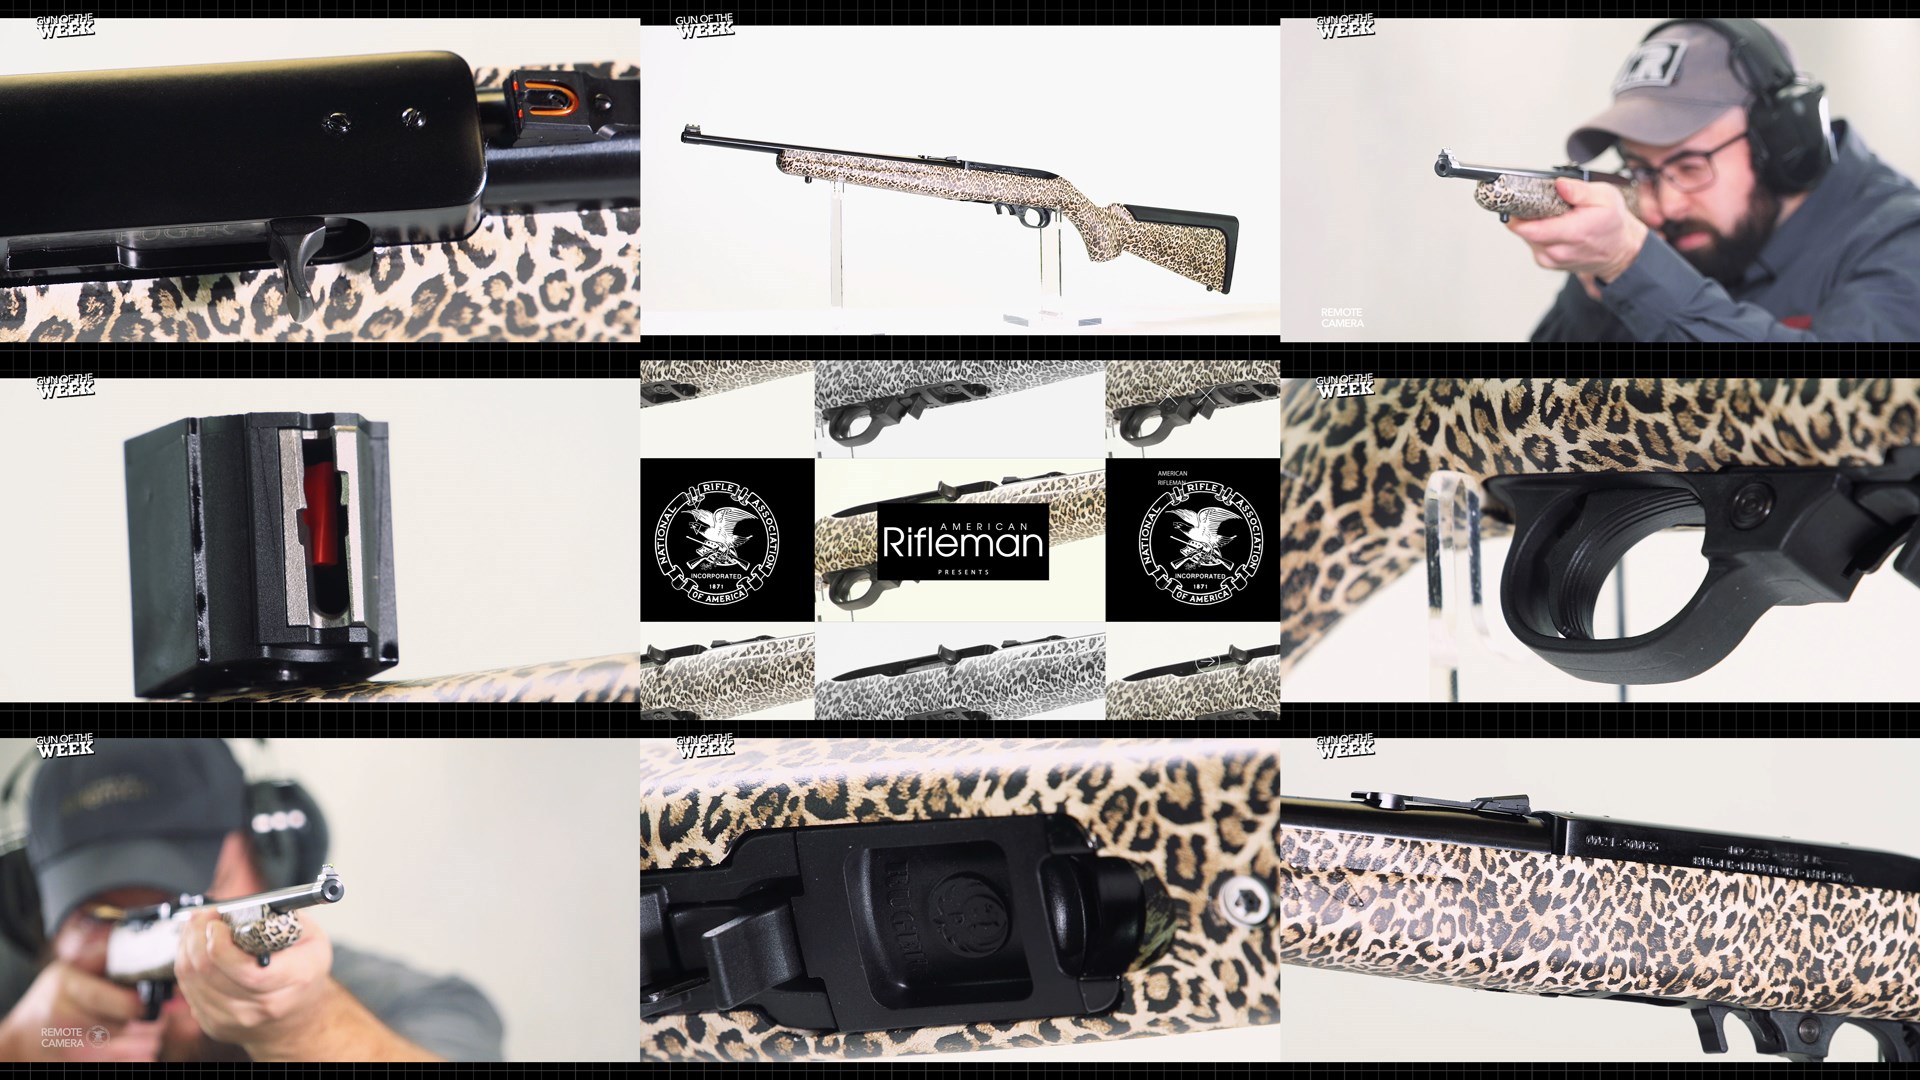 AMERICAN RIFLEMAN logo NRA logo center tiles 9 images stack mosaic men shooting leopard print ruger 10/22 rifle carbine gun .22LR rimfire semi-automatic